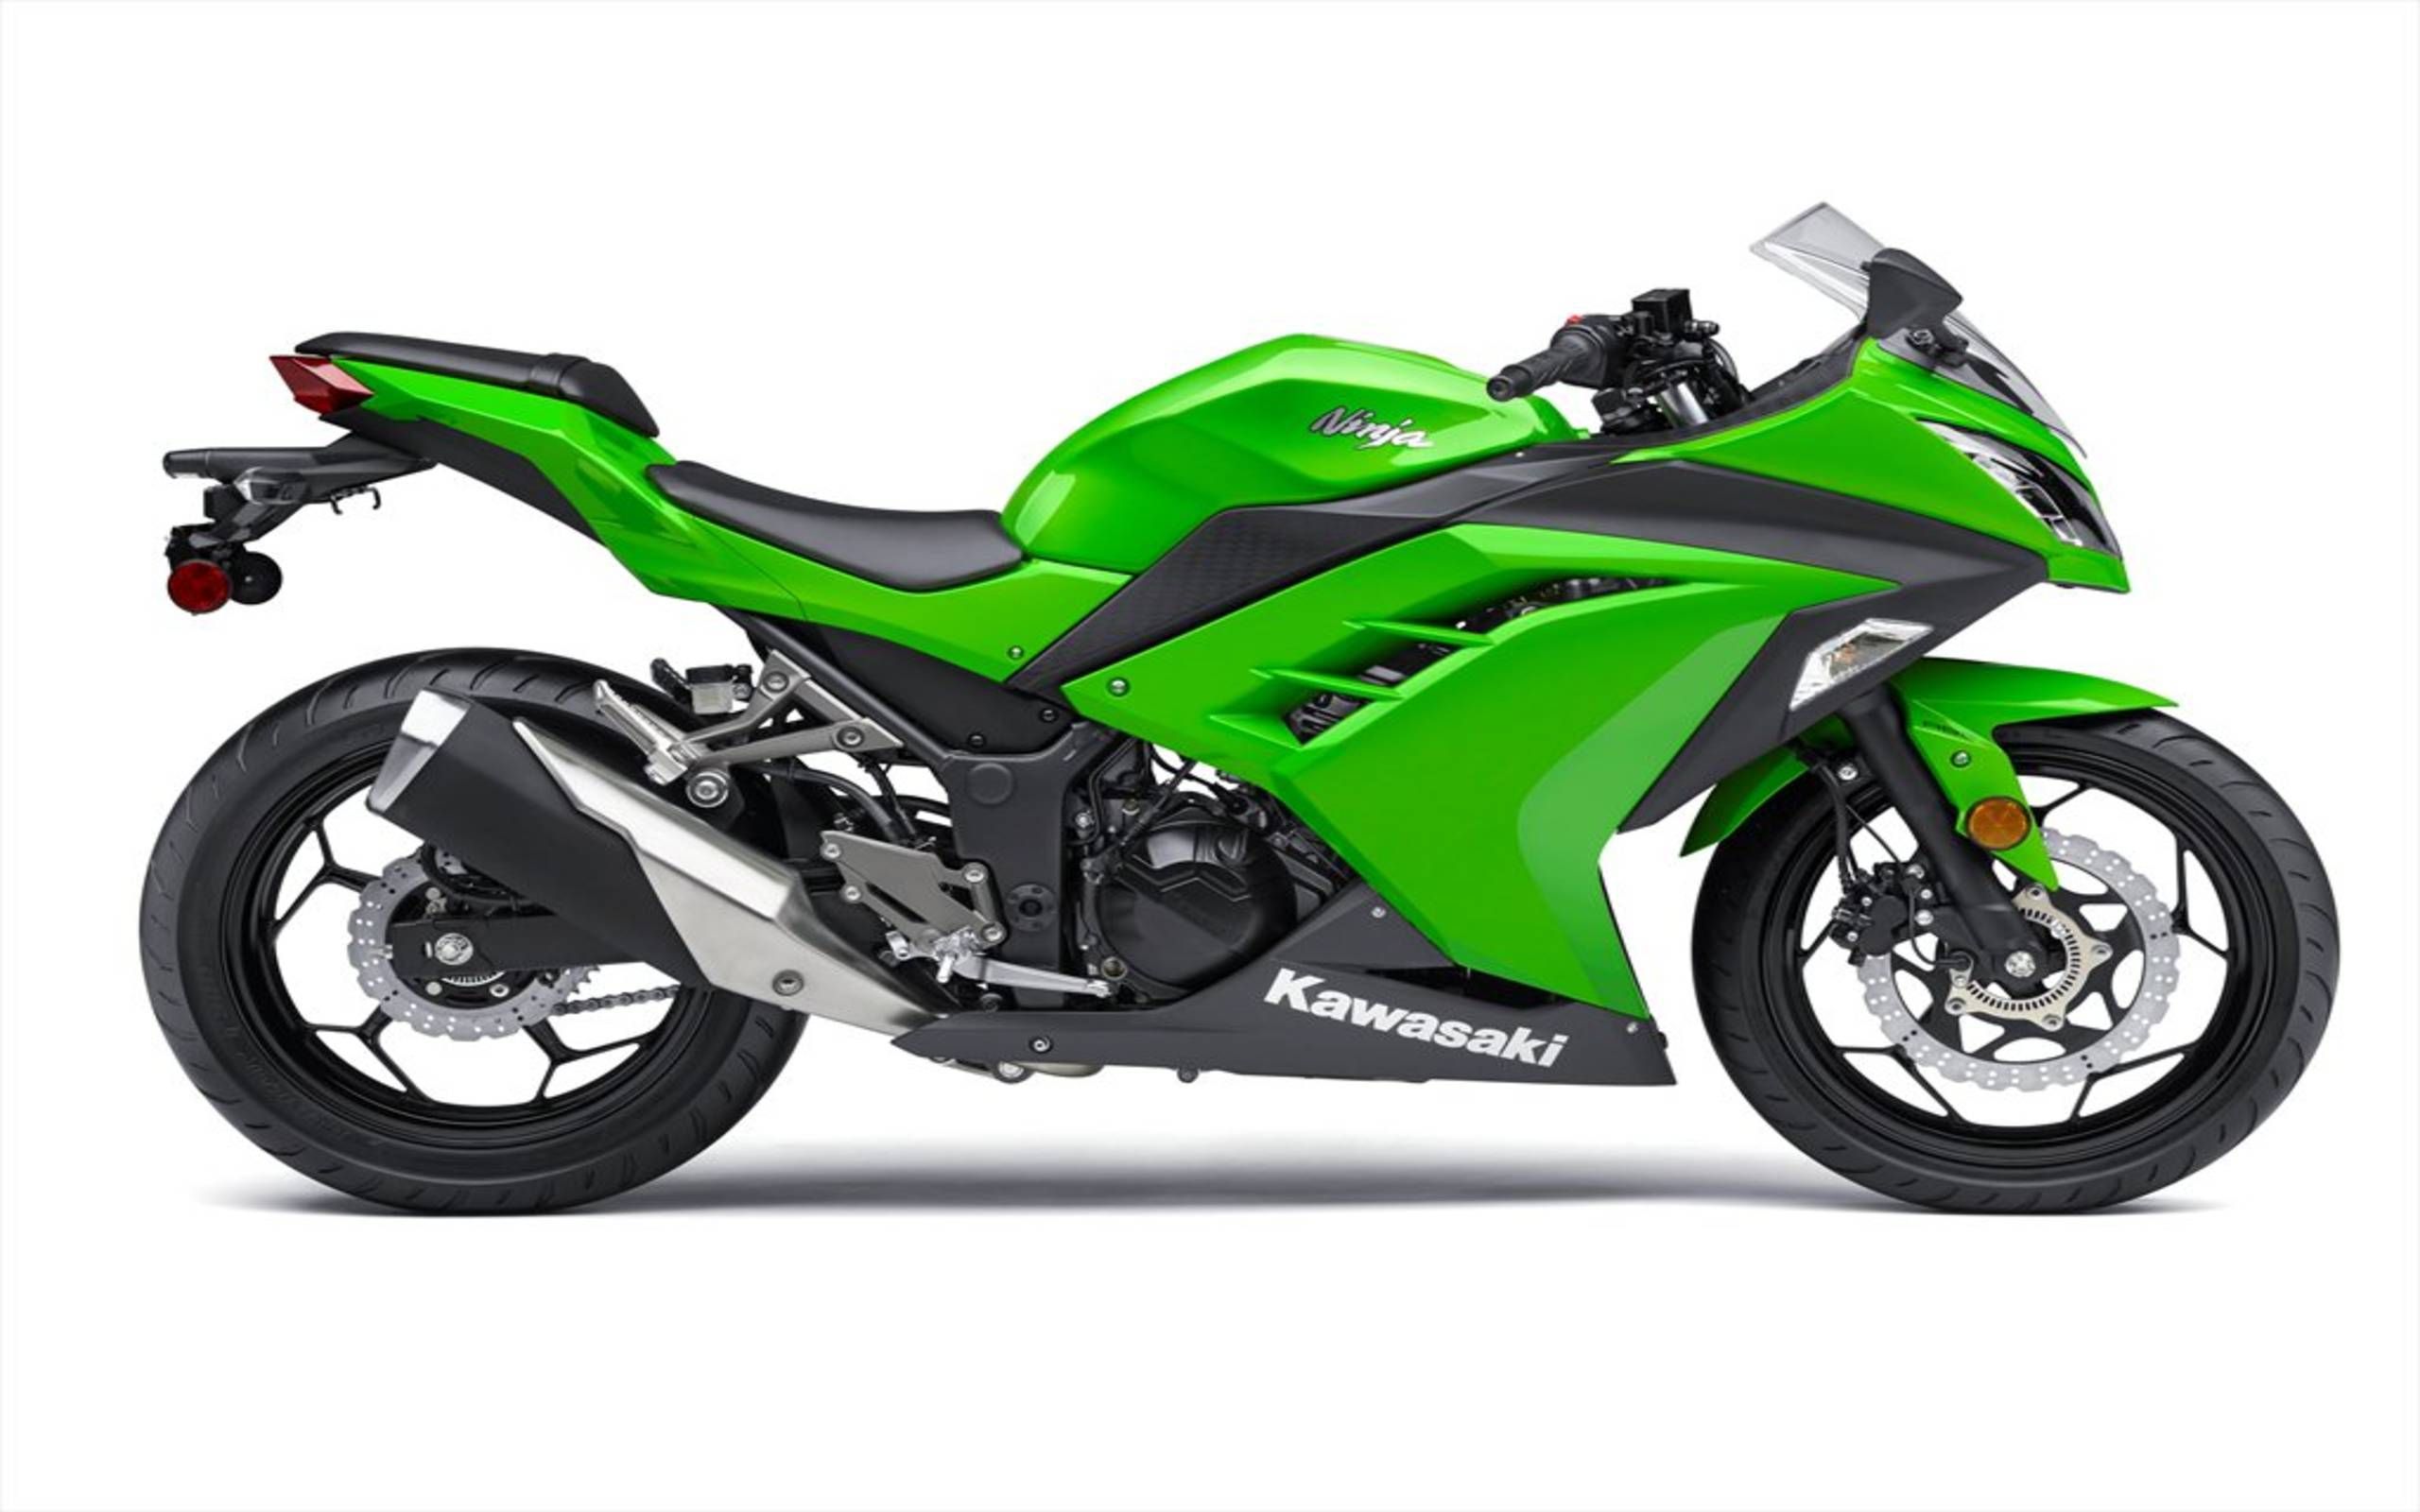 farvning løbetur toksicitet 2015 Kawasaki Ninja 300 ABS ride review